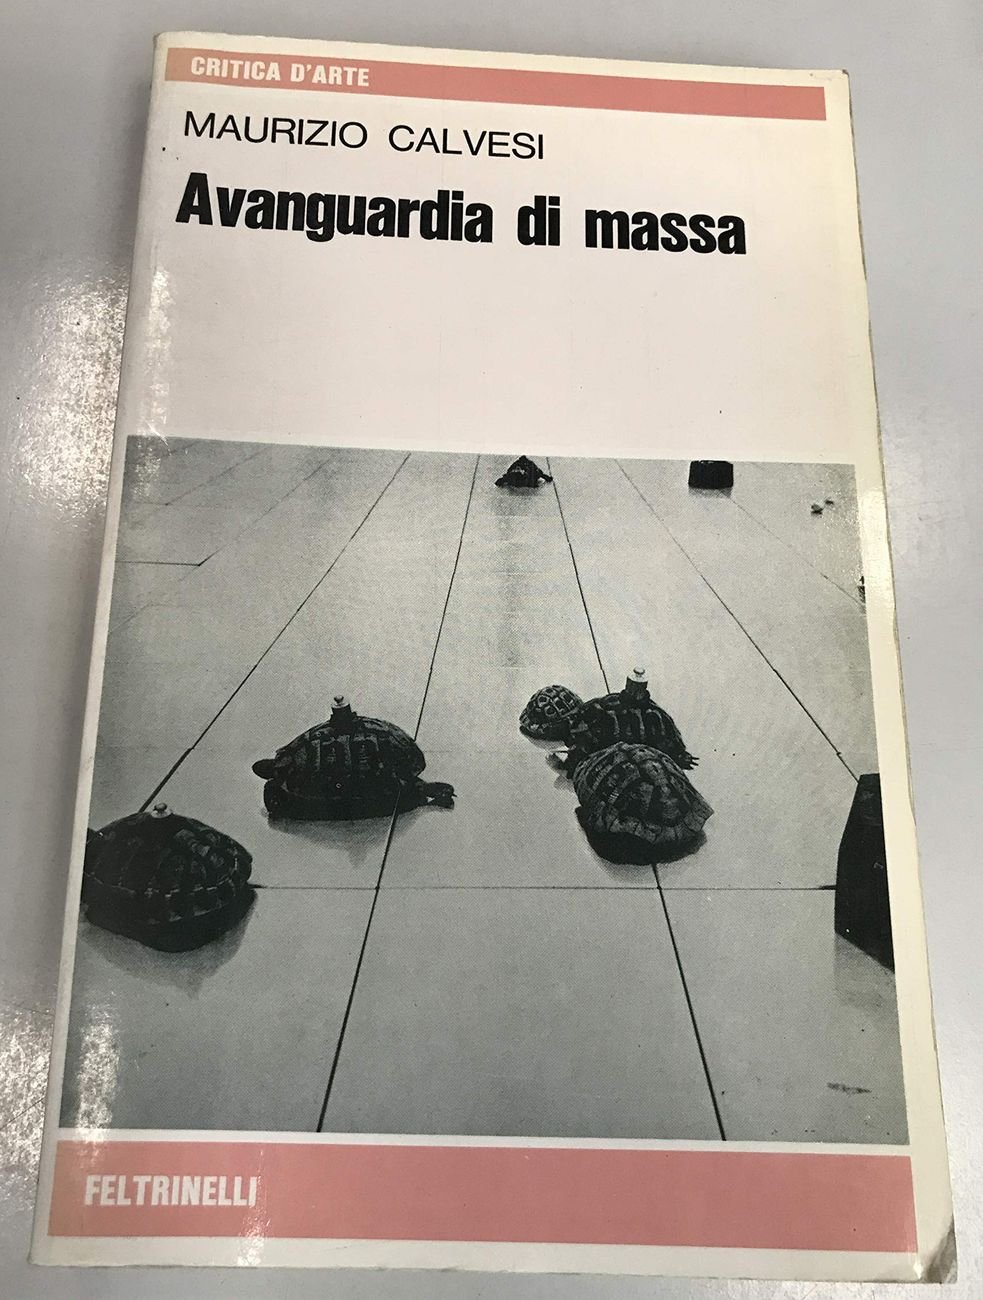 Maurizio Calvesi - Avanguardia di massa (Feltrinelli, Milano 1978)